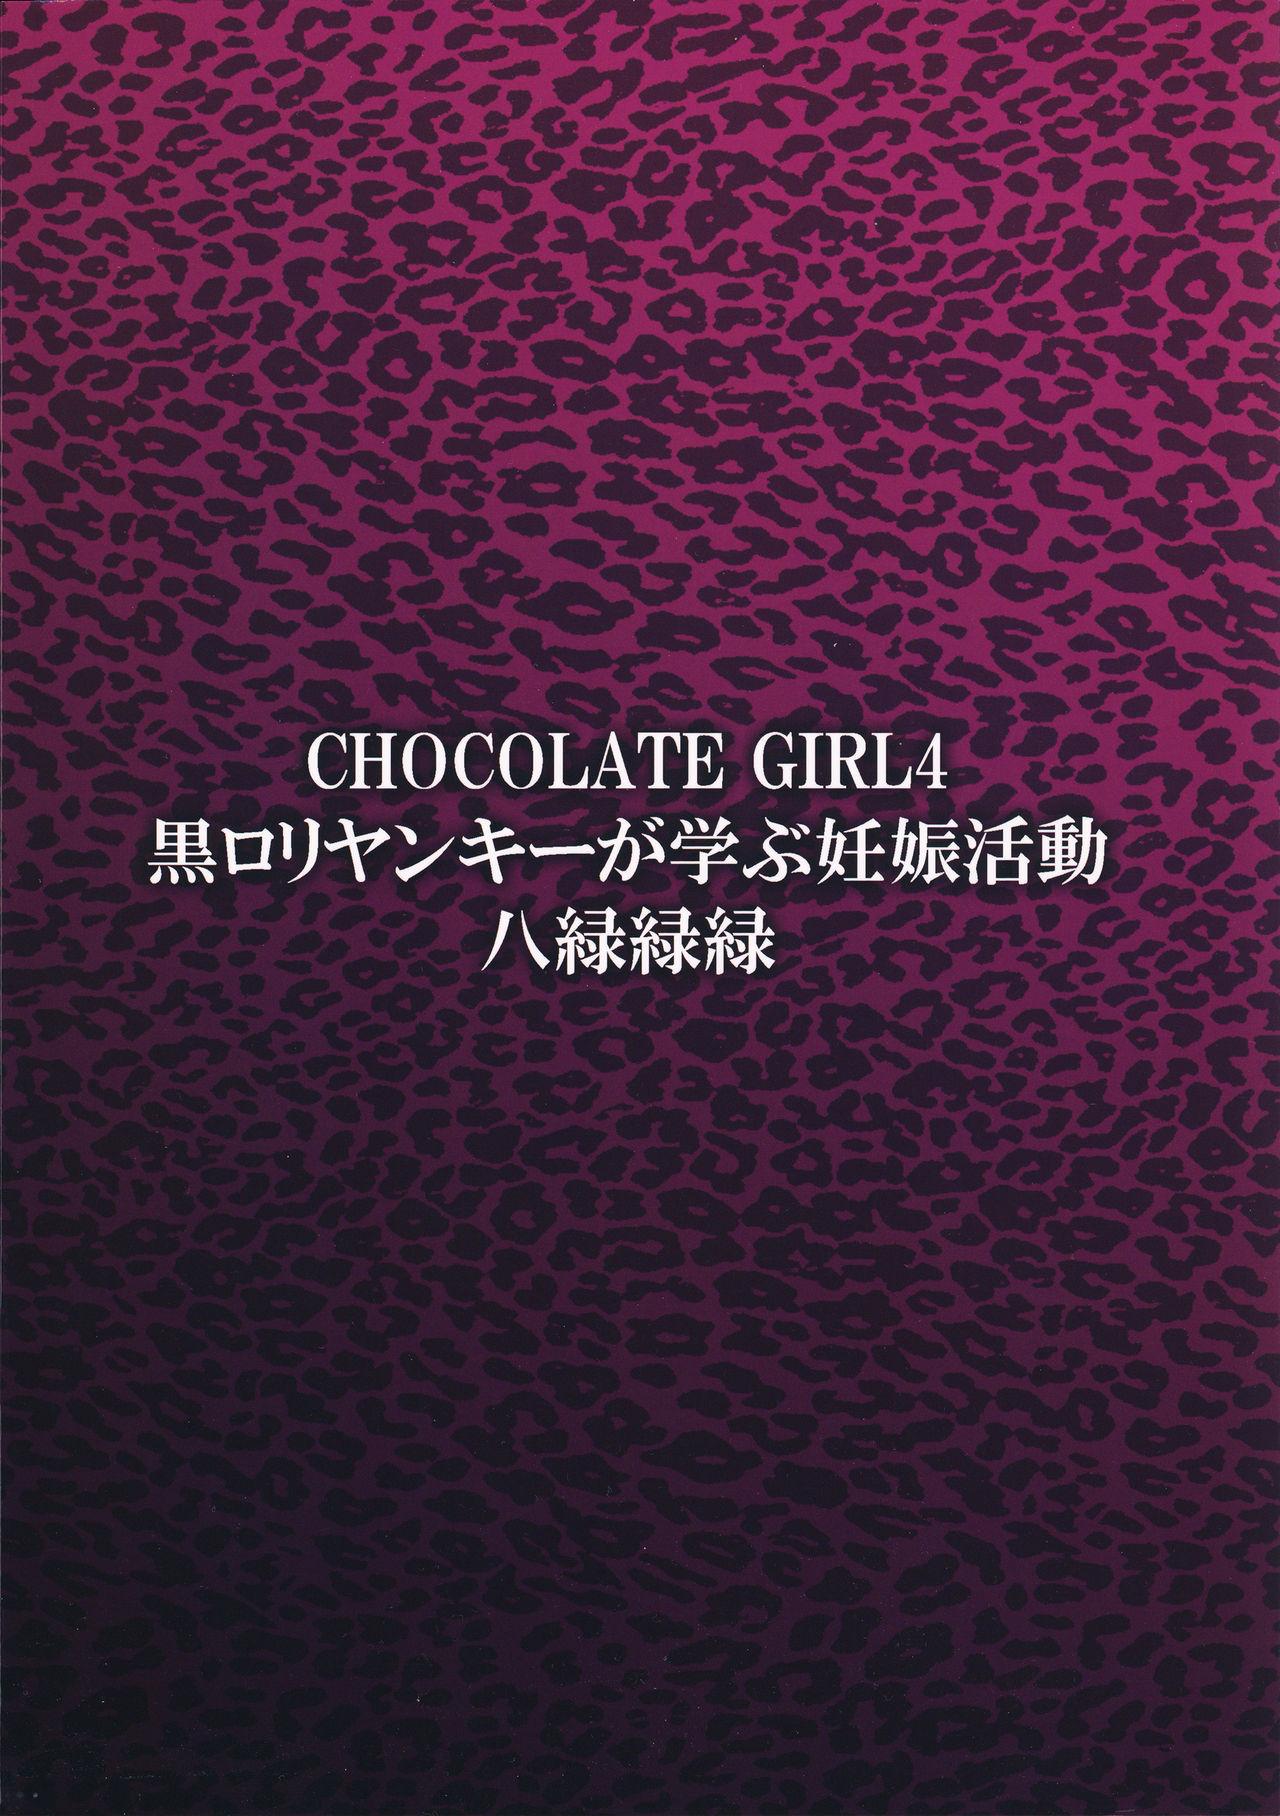 CHOCOLATE GIRL 4 Kuro Loli Yankee ga Manabu Ninshin Katsudou 17